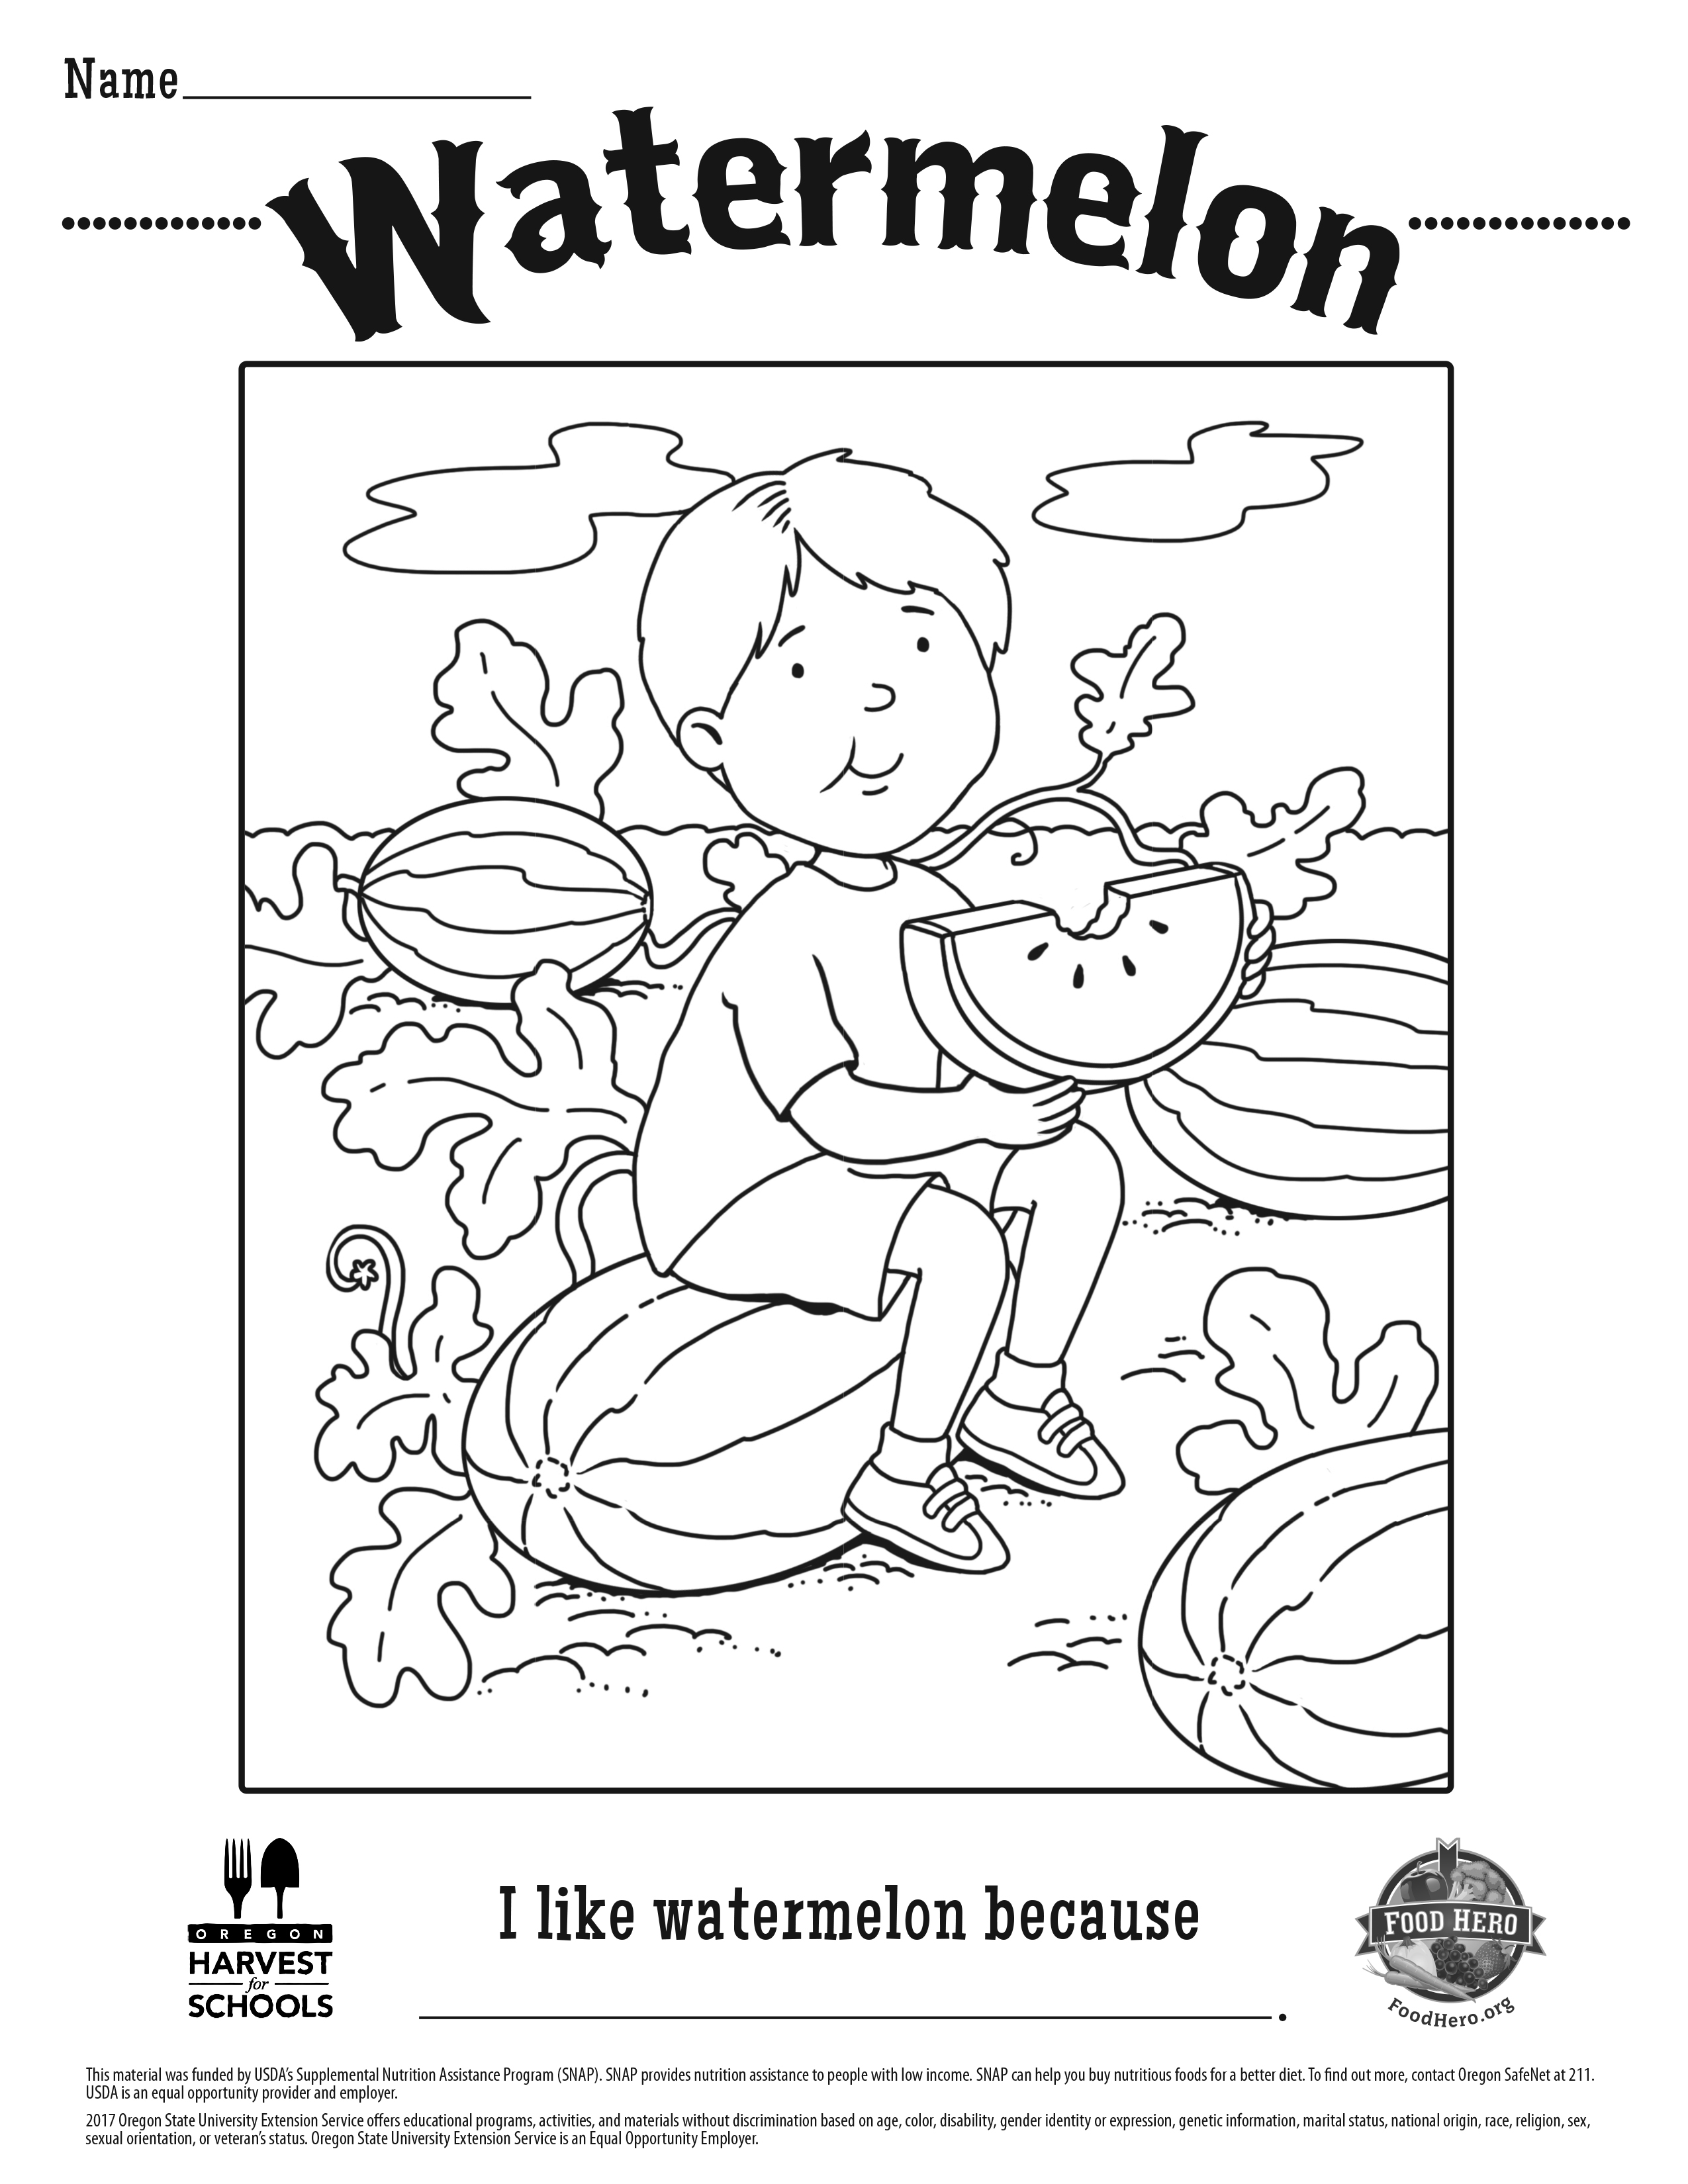 Watermelon | Food Hero